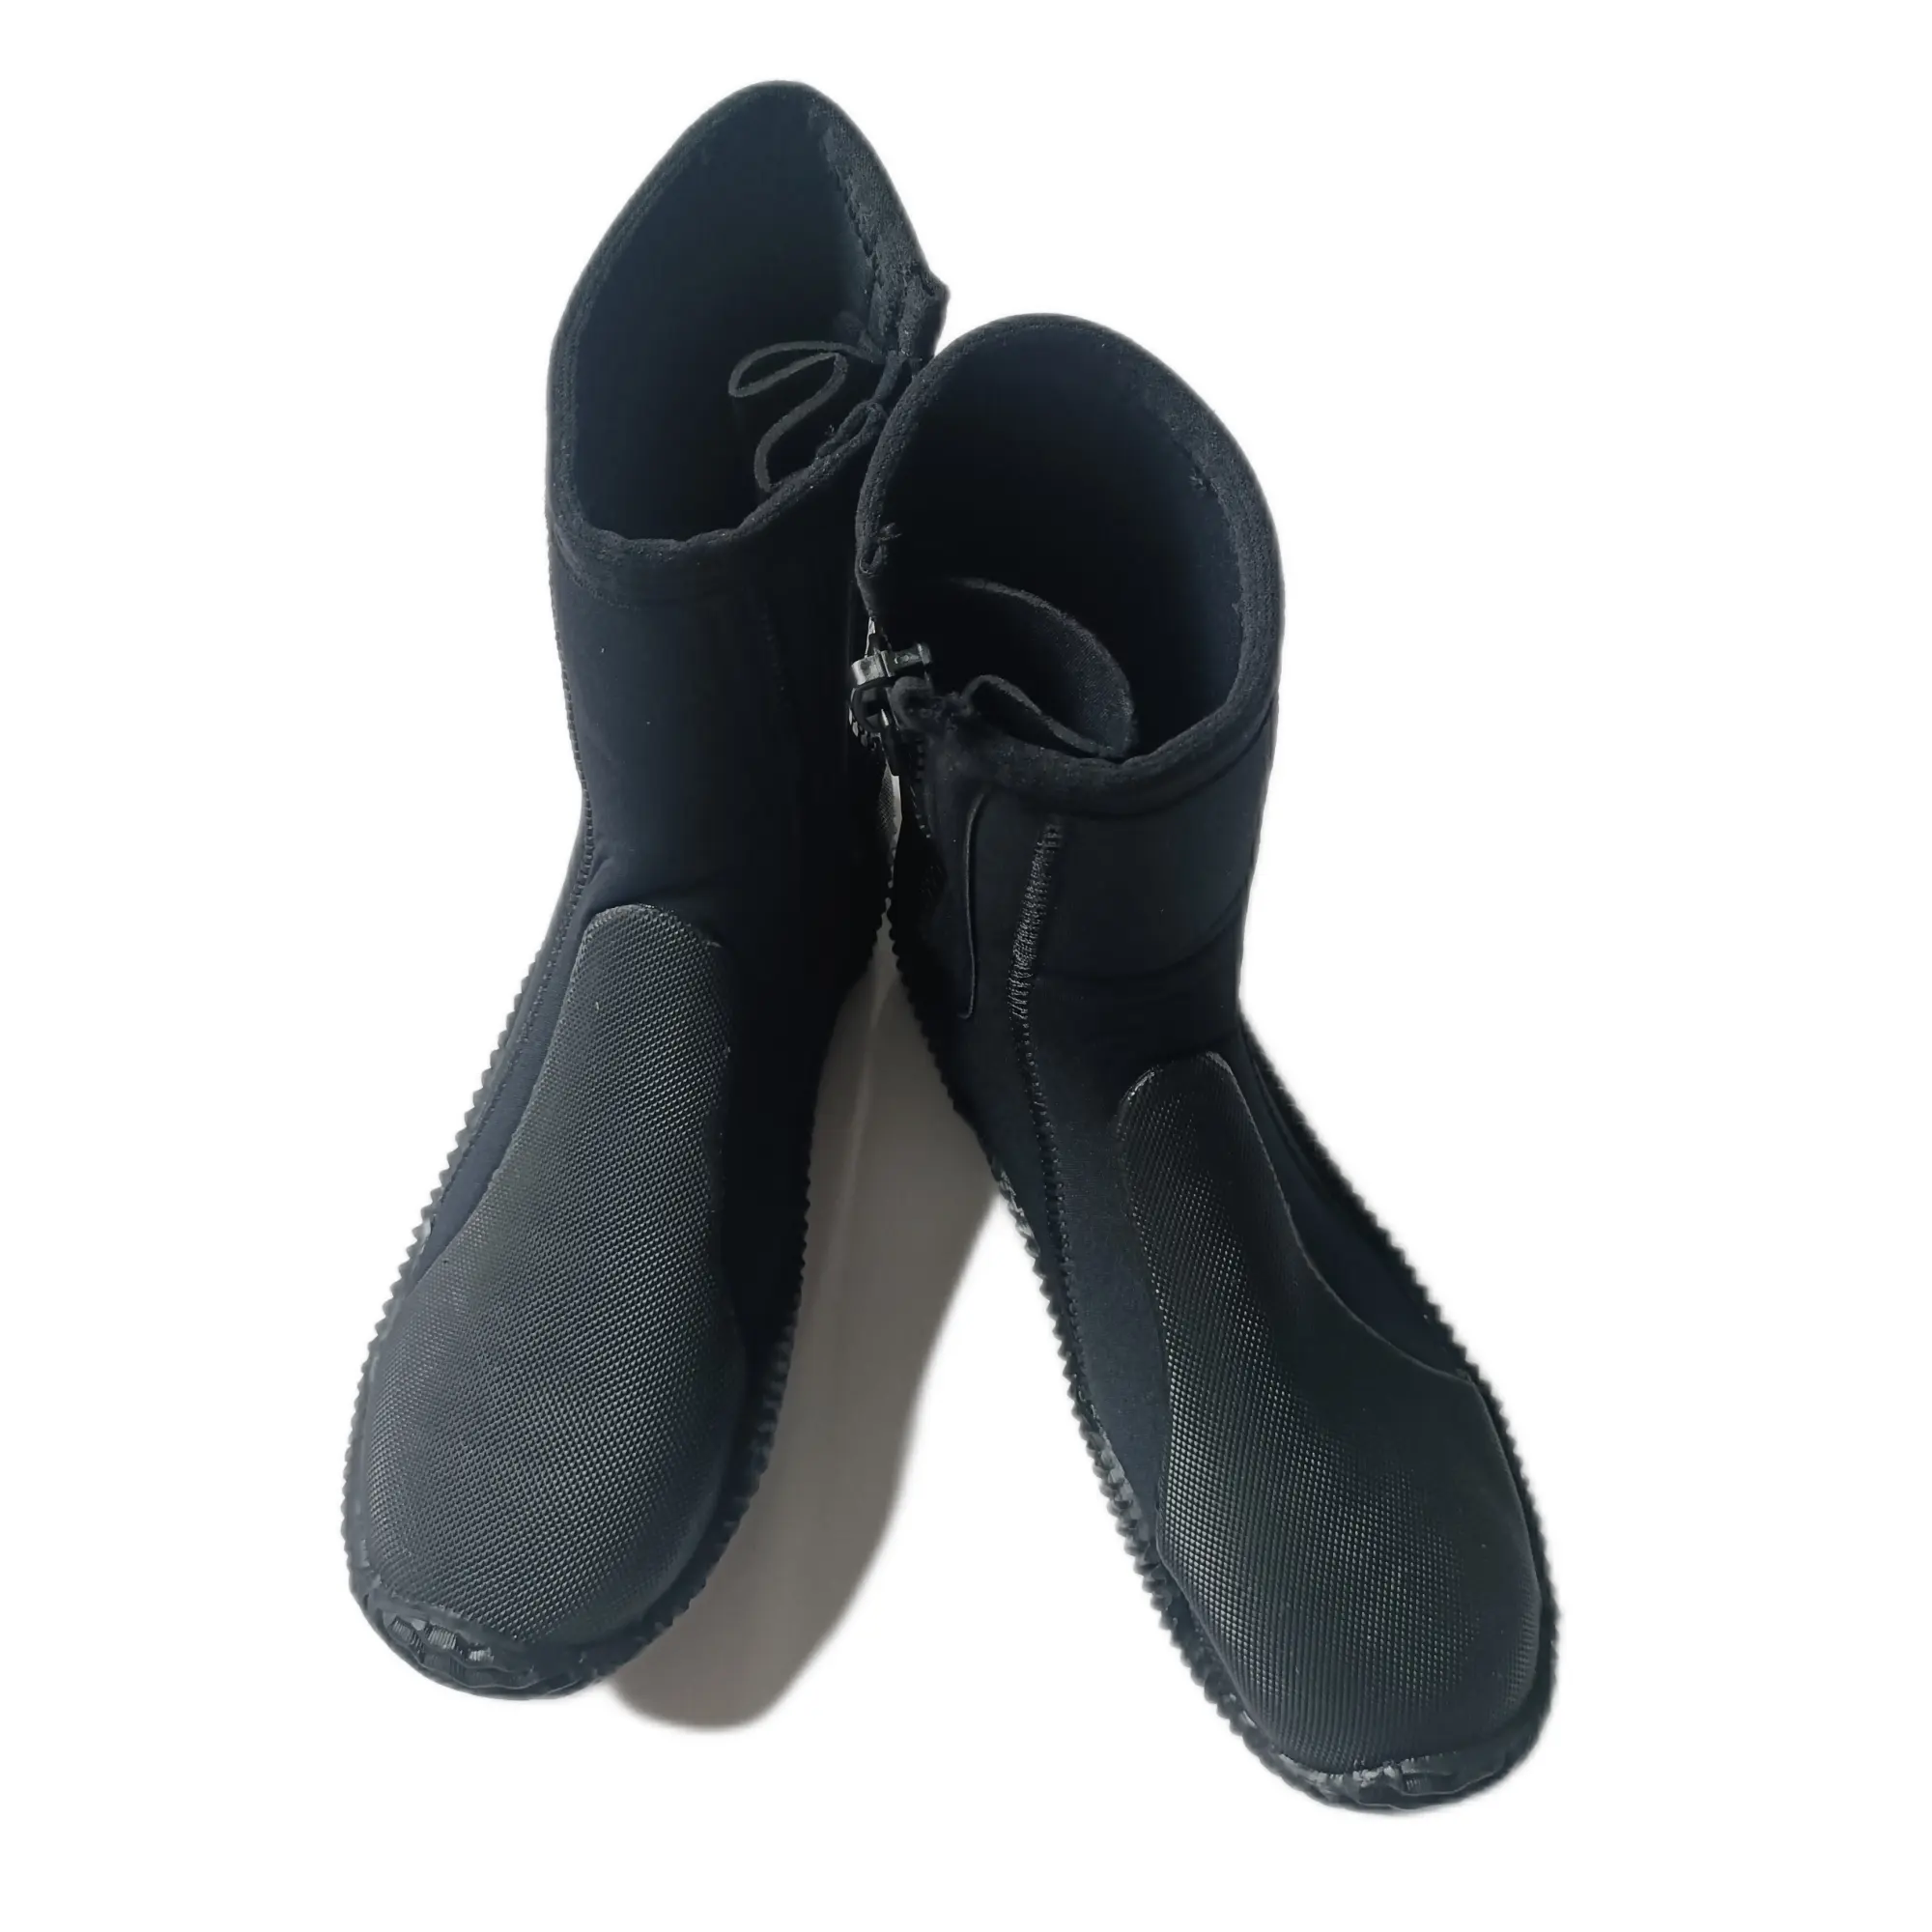 Dongguan Xinglong New Design Short Long Black Boots Waterproof Men Rubber boots Hunting Rain Boots Upstream Shoes